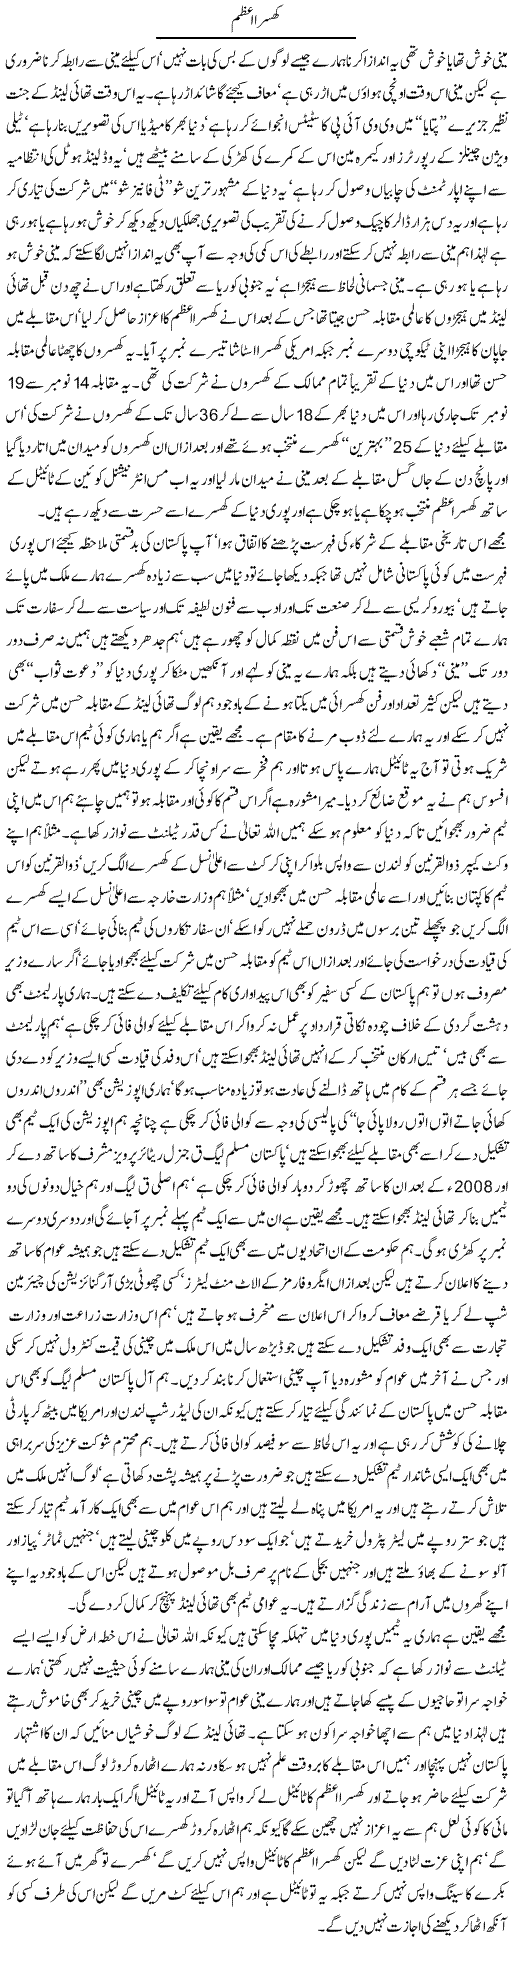 Biggest Khursa Express Column Javed Chaudhry 25 November 2010